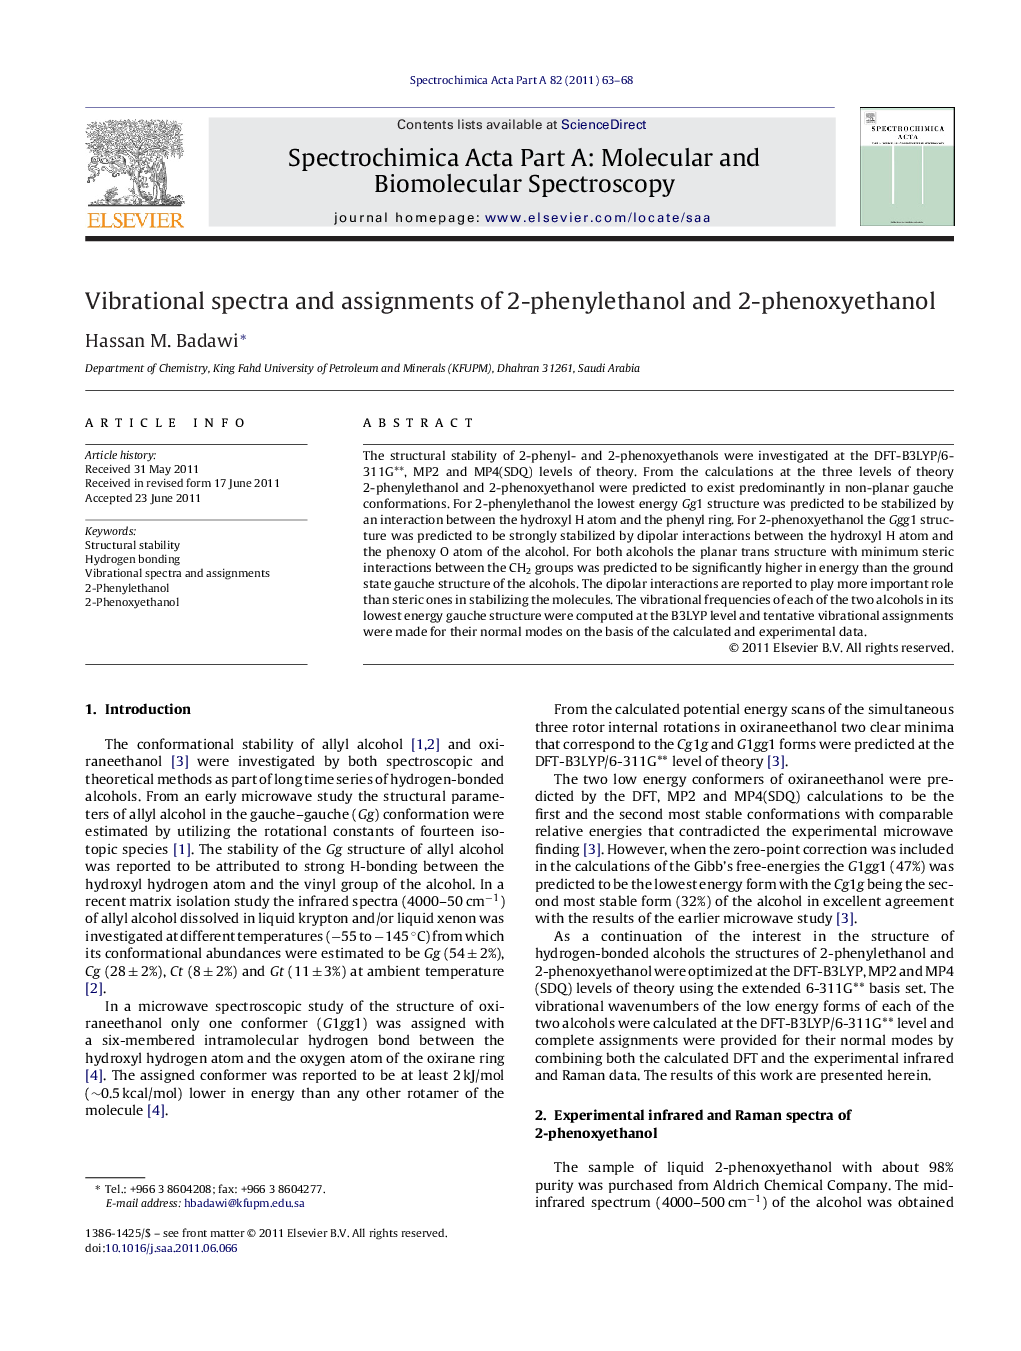 Vibrational spectra and assignments of 2-phenylethanol and 2-phenoxyethanol